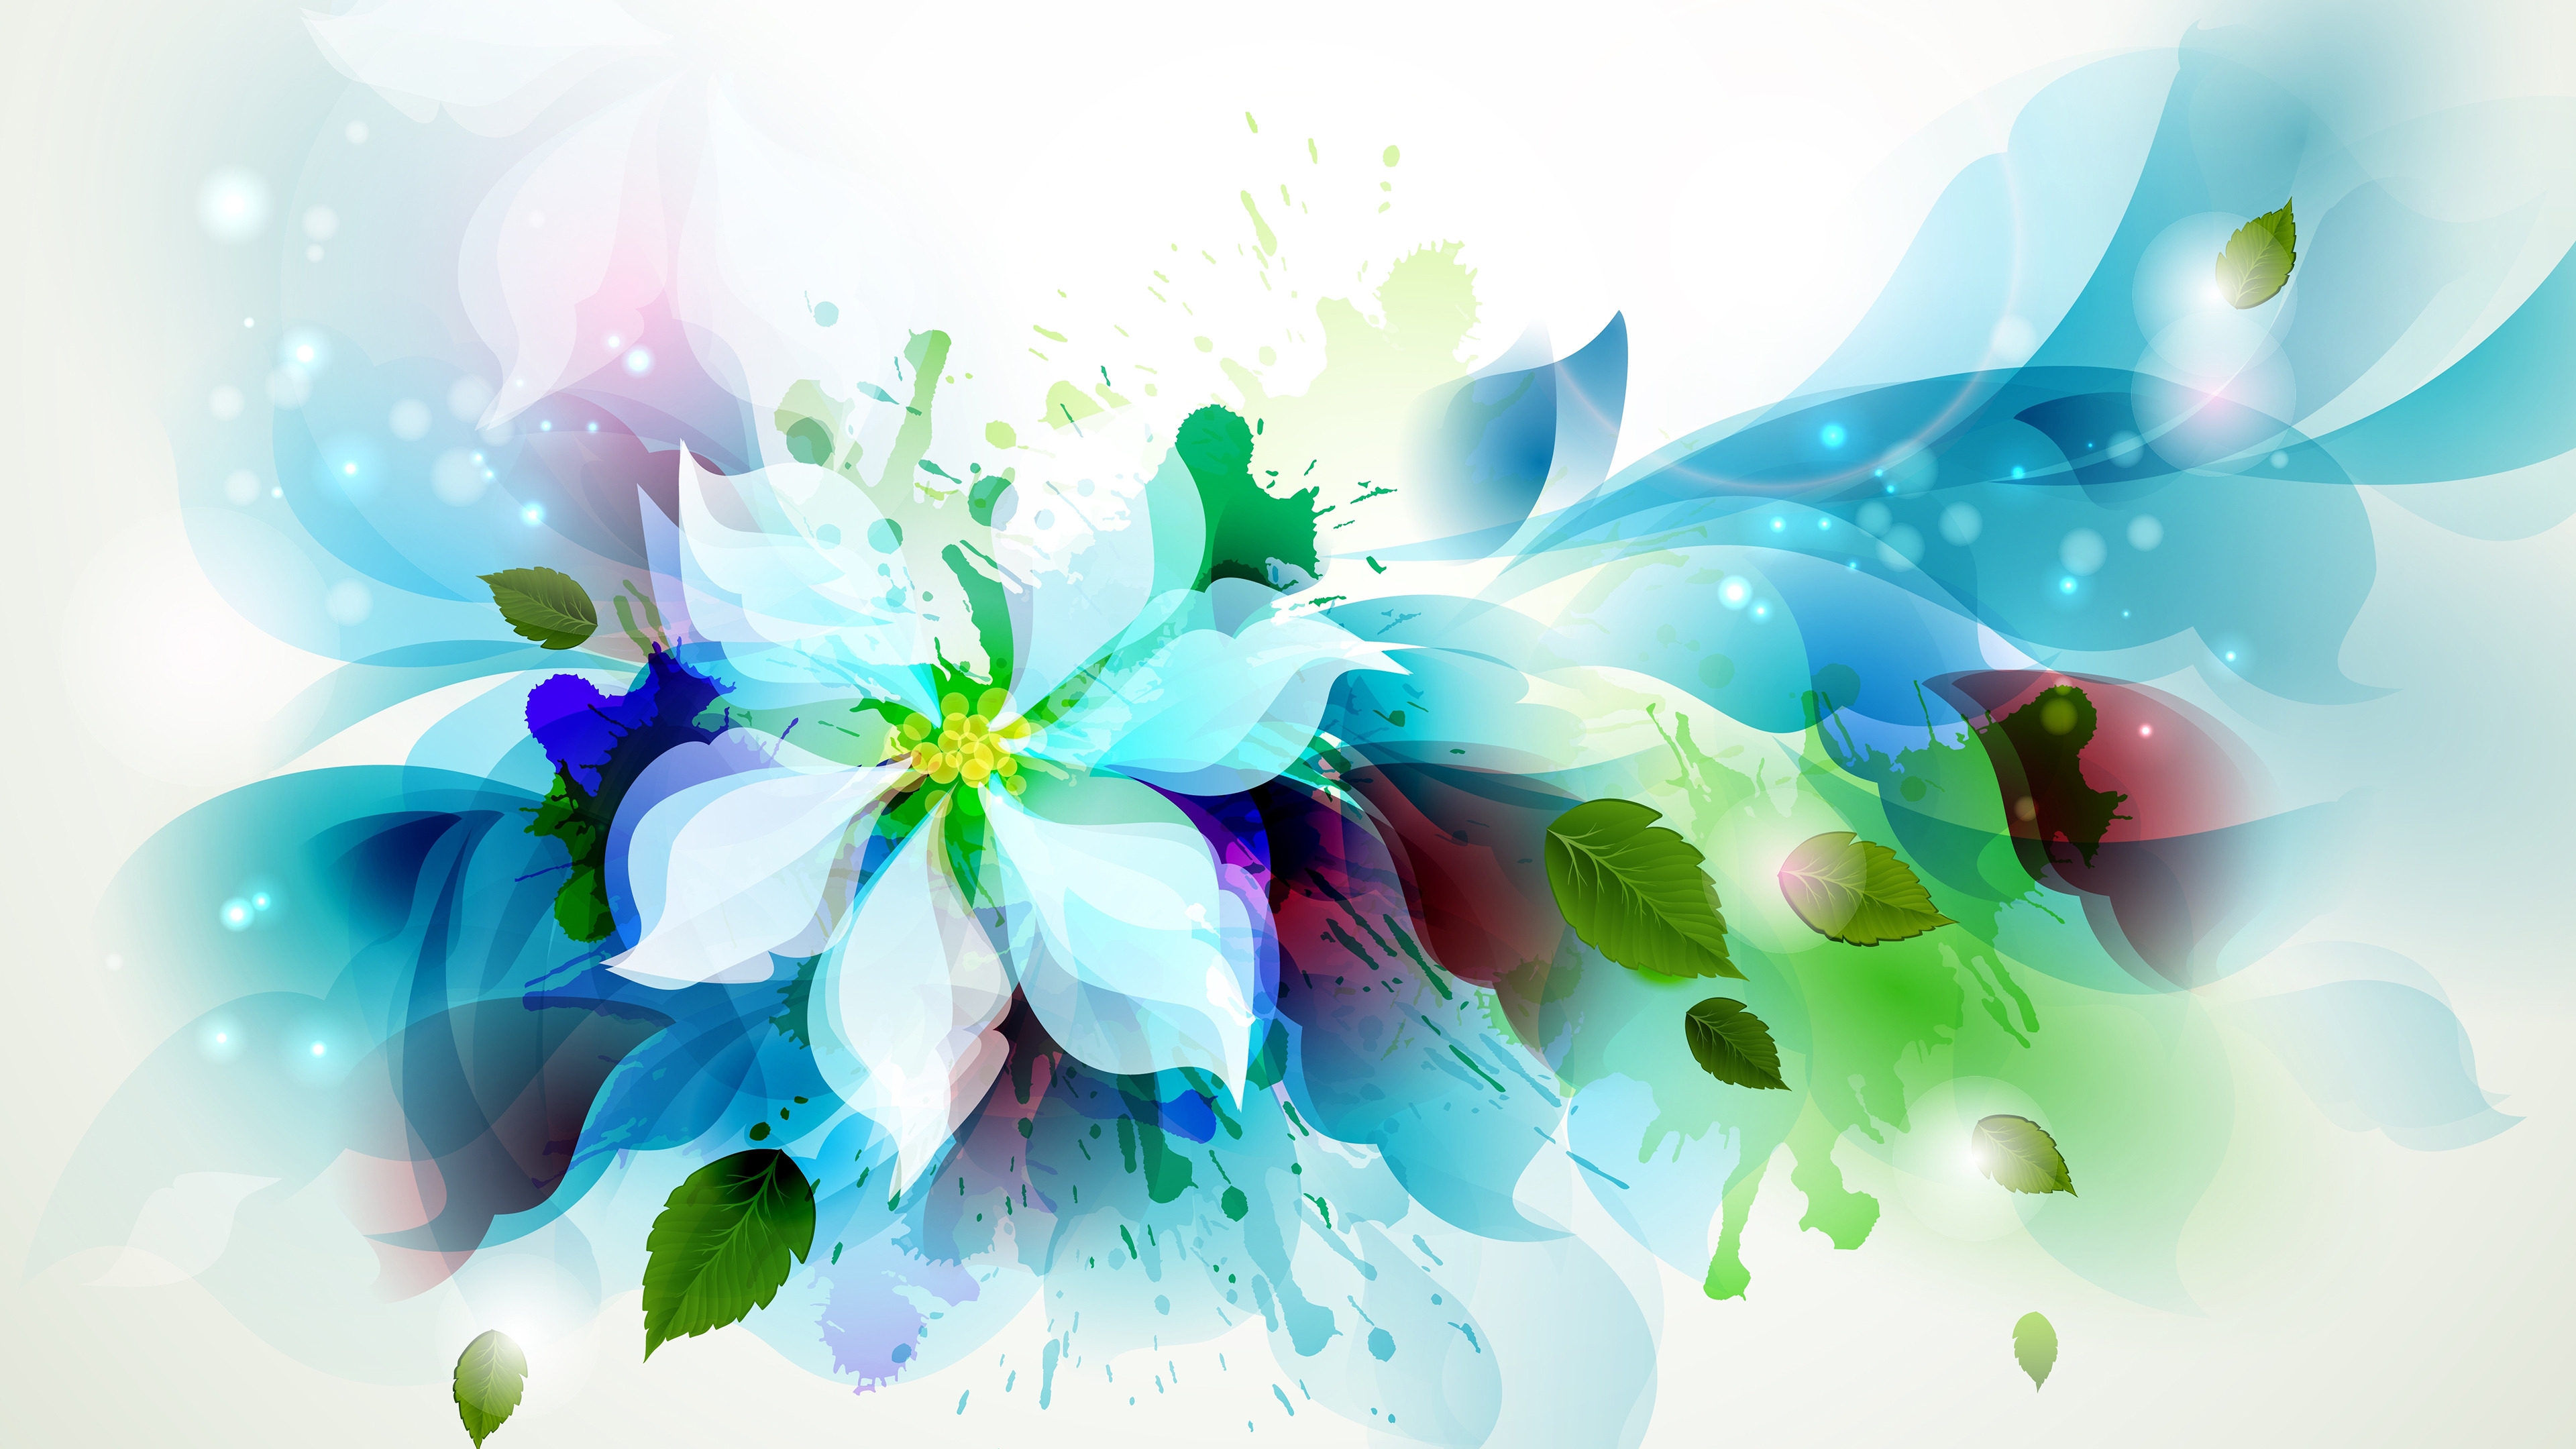 Beautiful Flower Art for 3840 x 2160 Ultra HD resolution